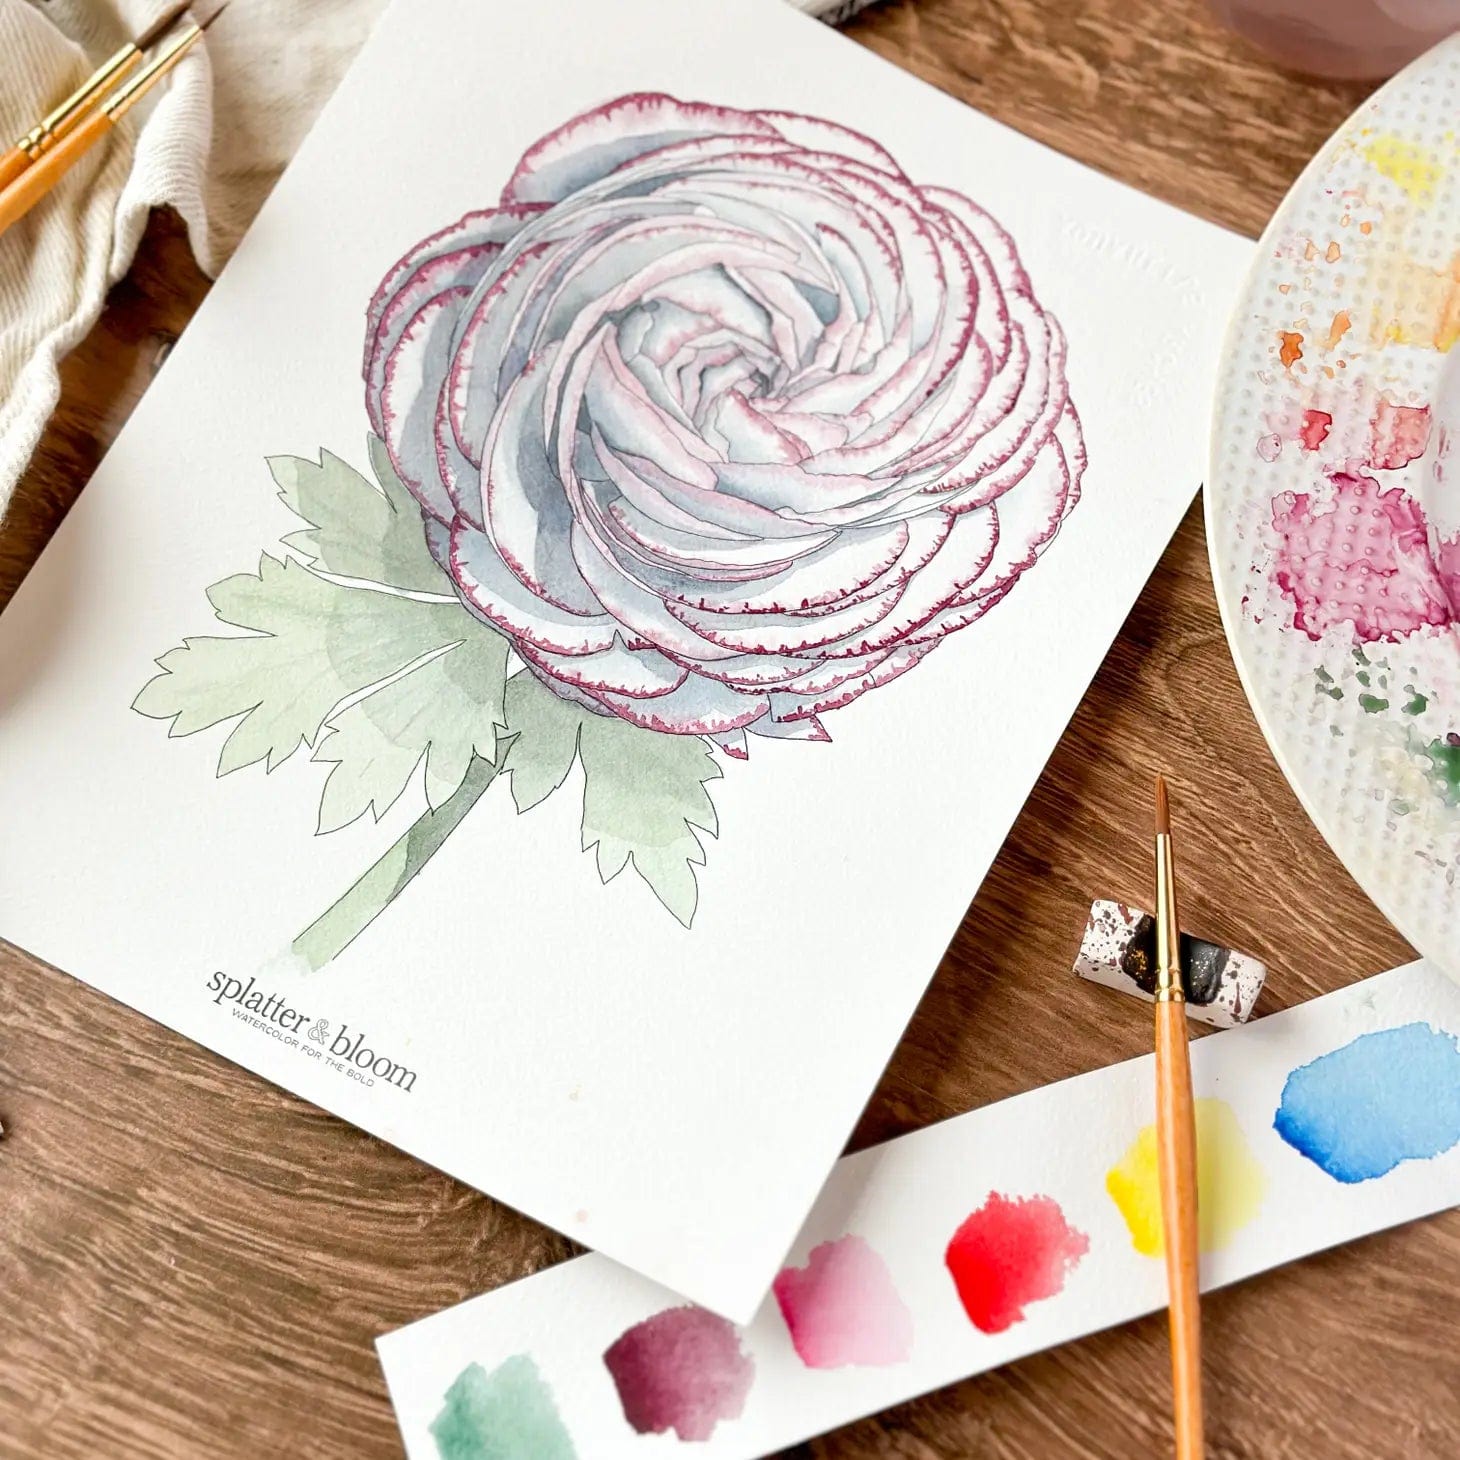 Fall Florals Watercolor Painting Kit – Splatter & Bloom